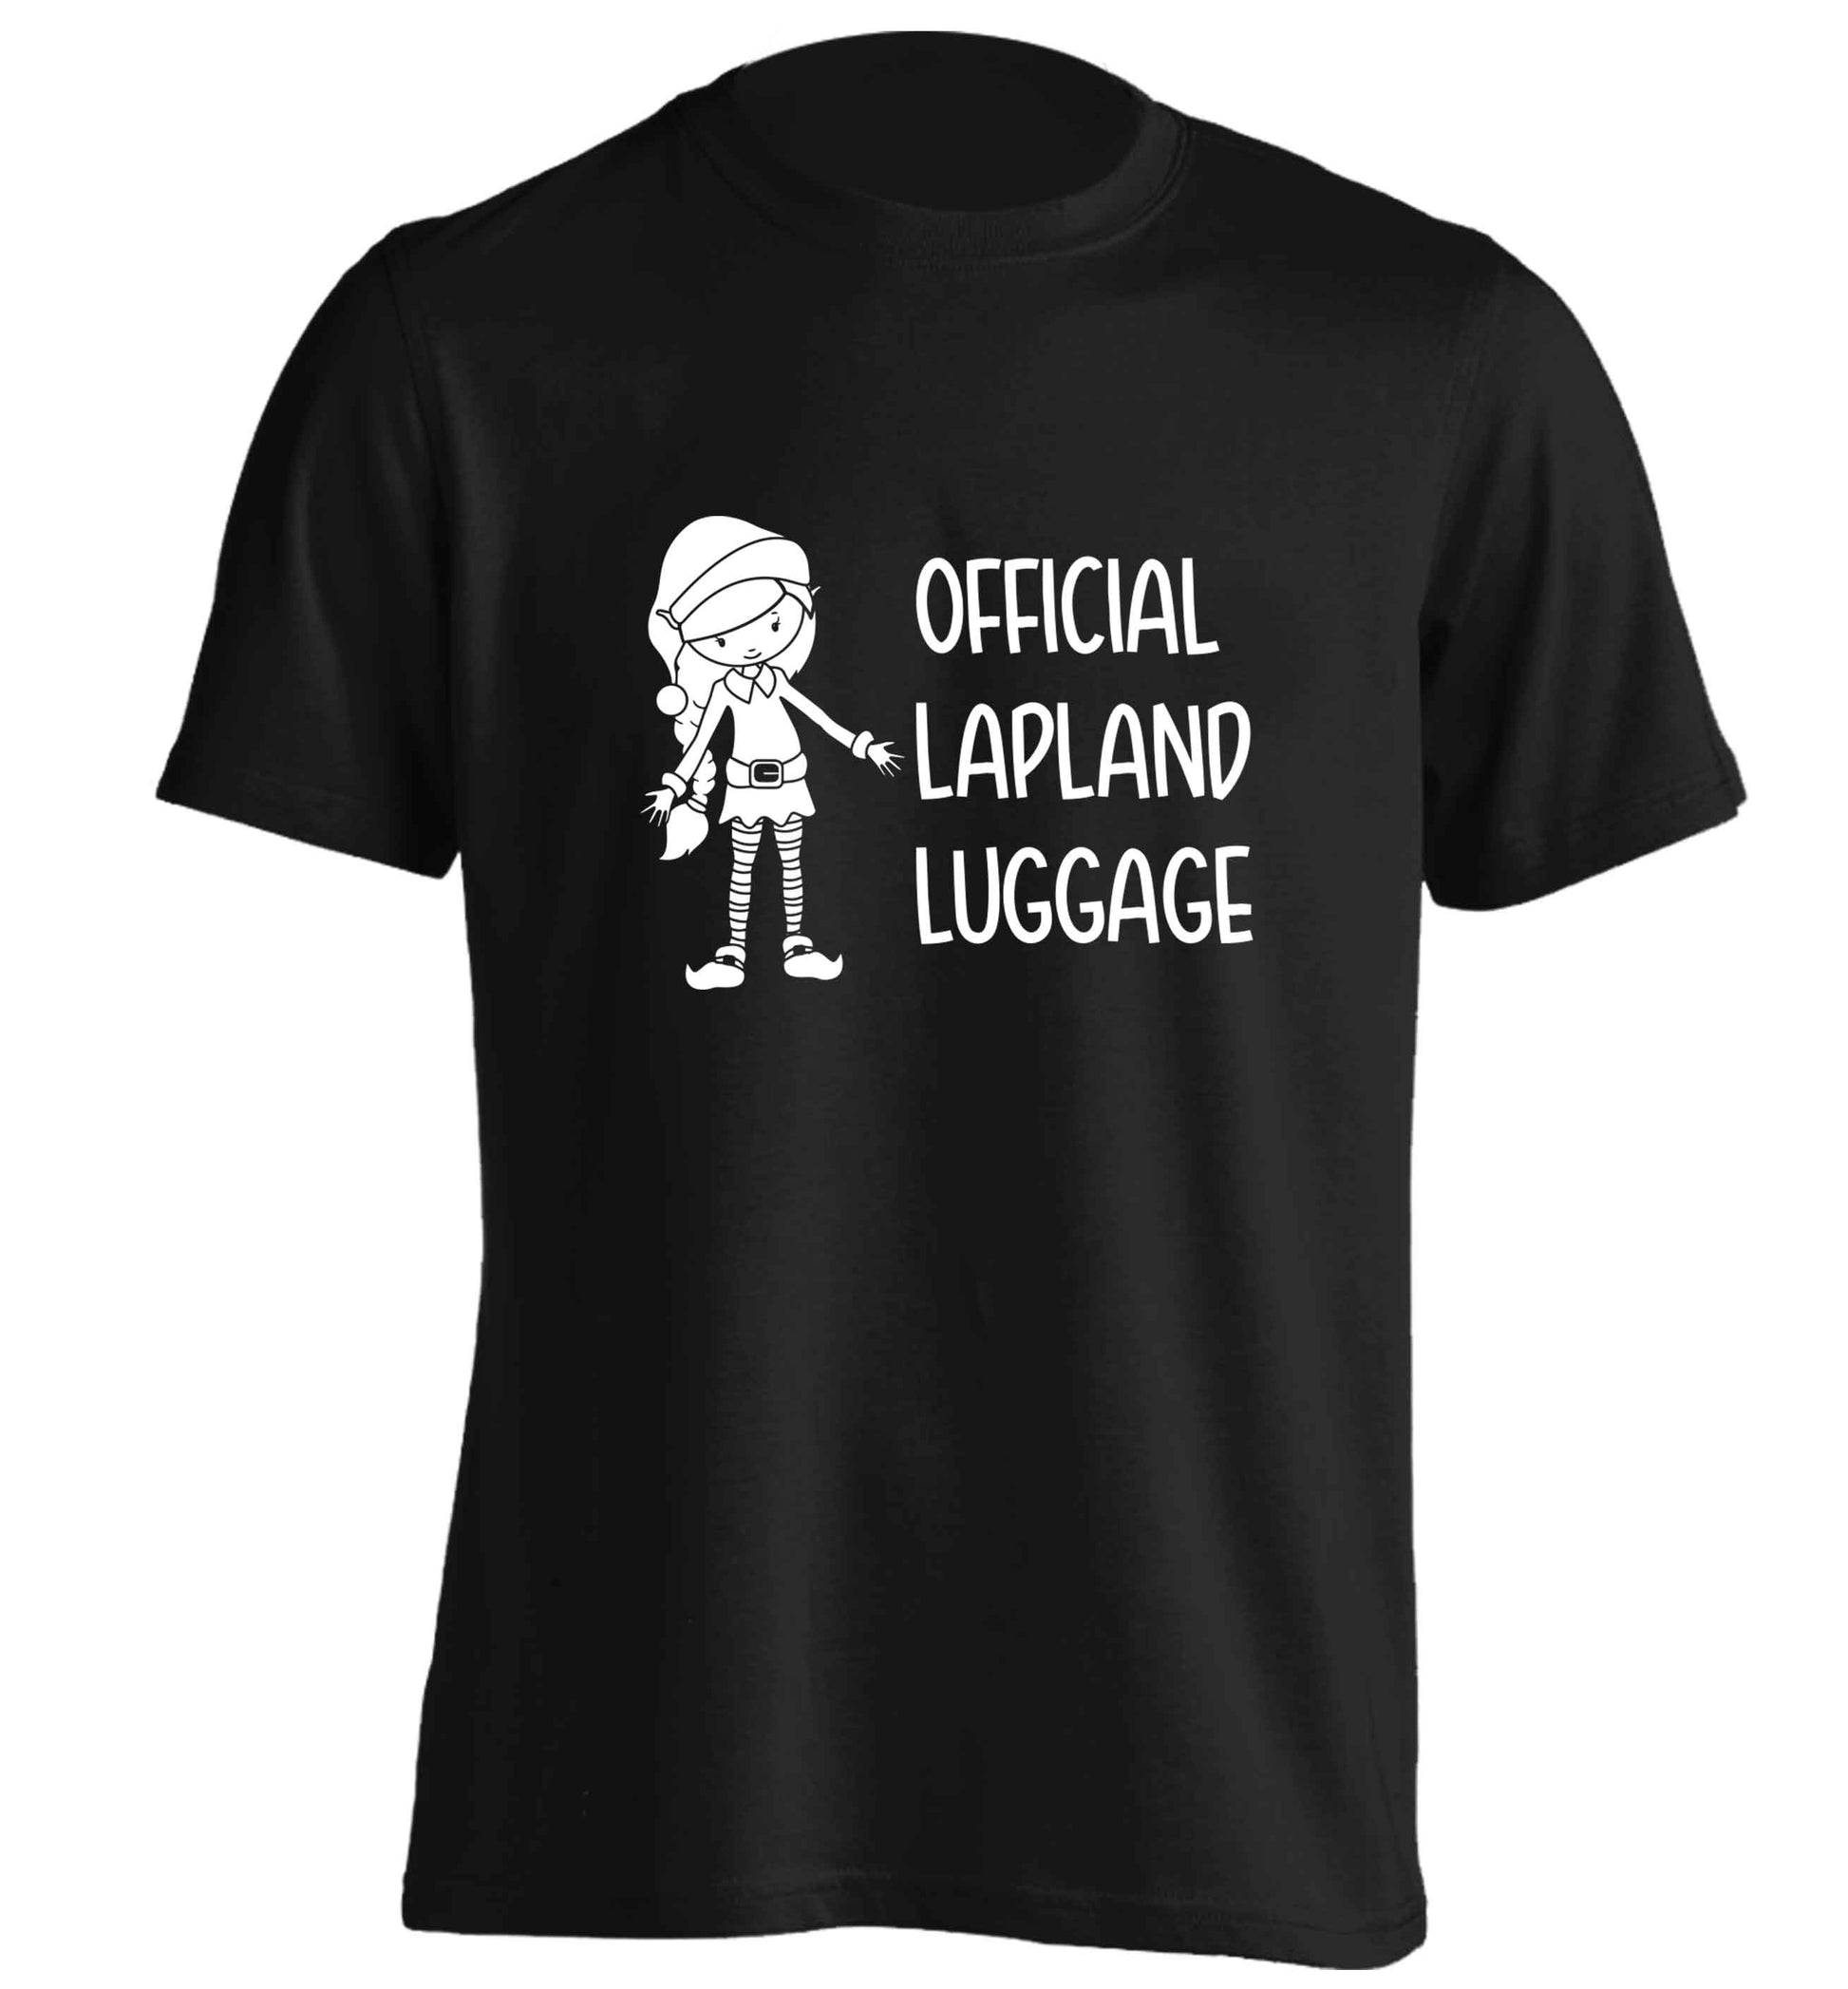 Official lapland luggage - Elf snowflake adults unisex black Tshirt 2XL